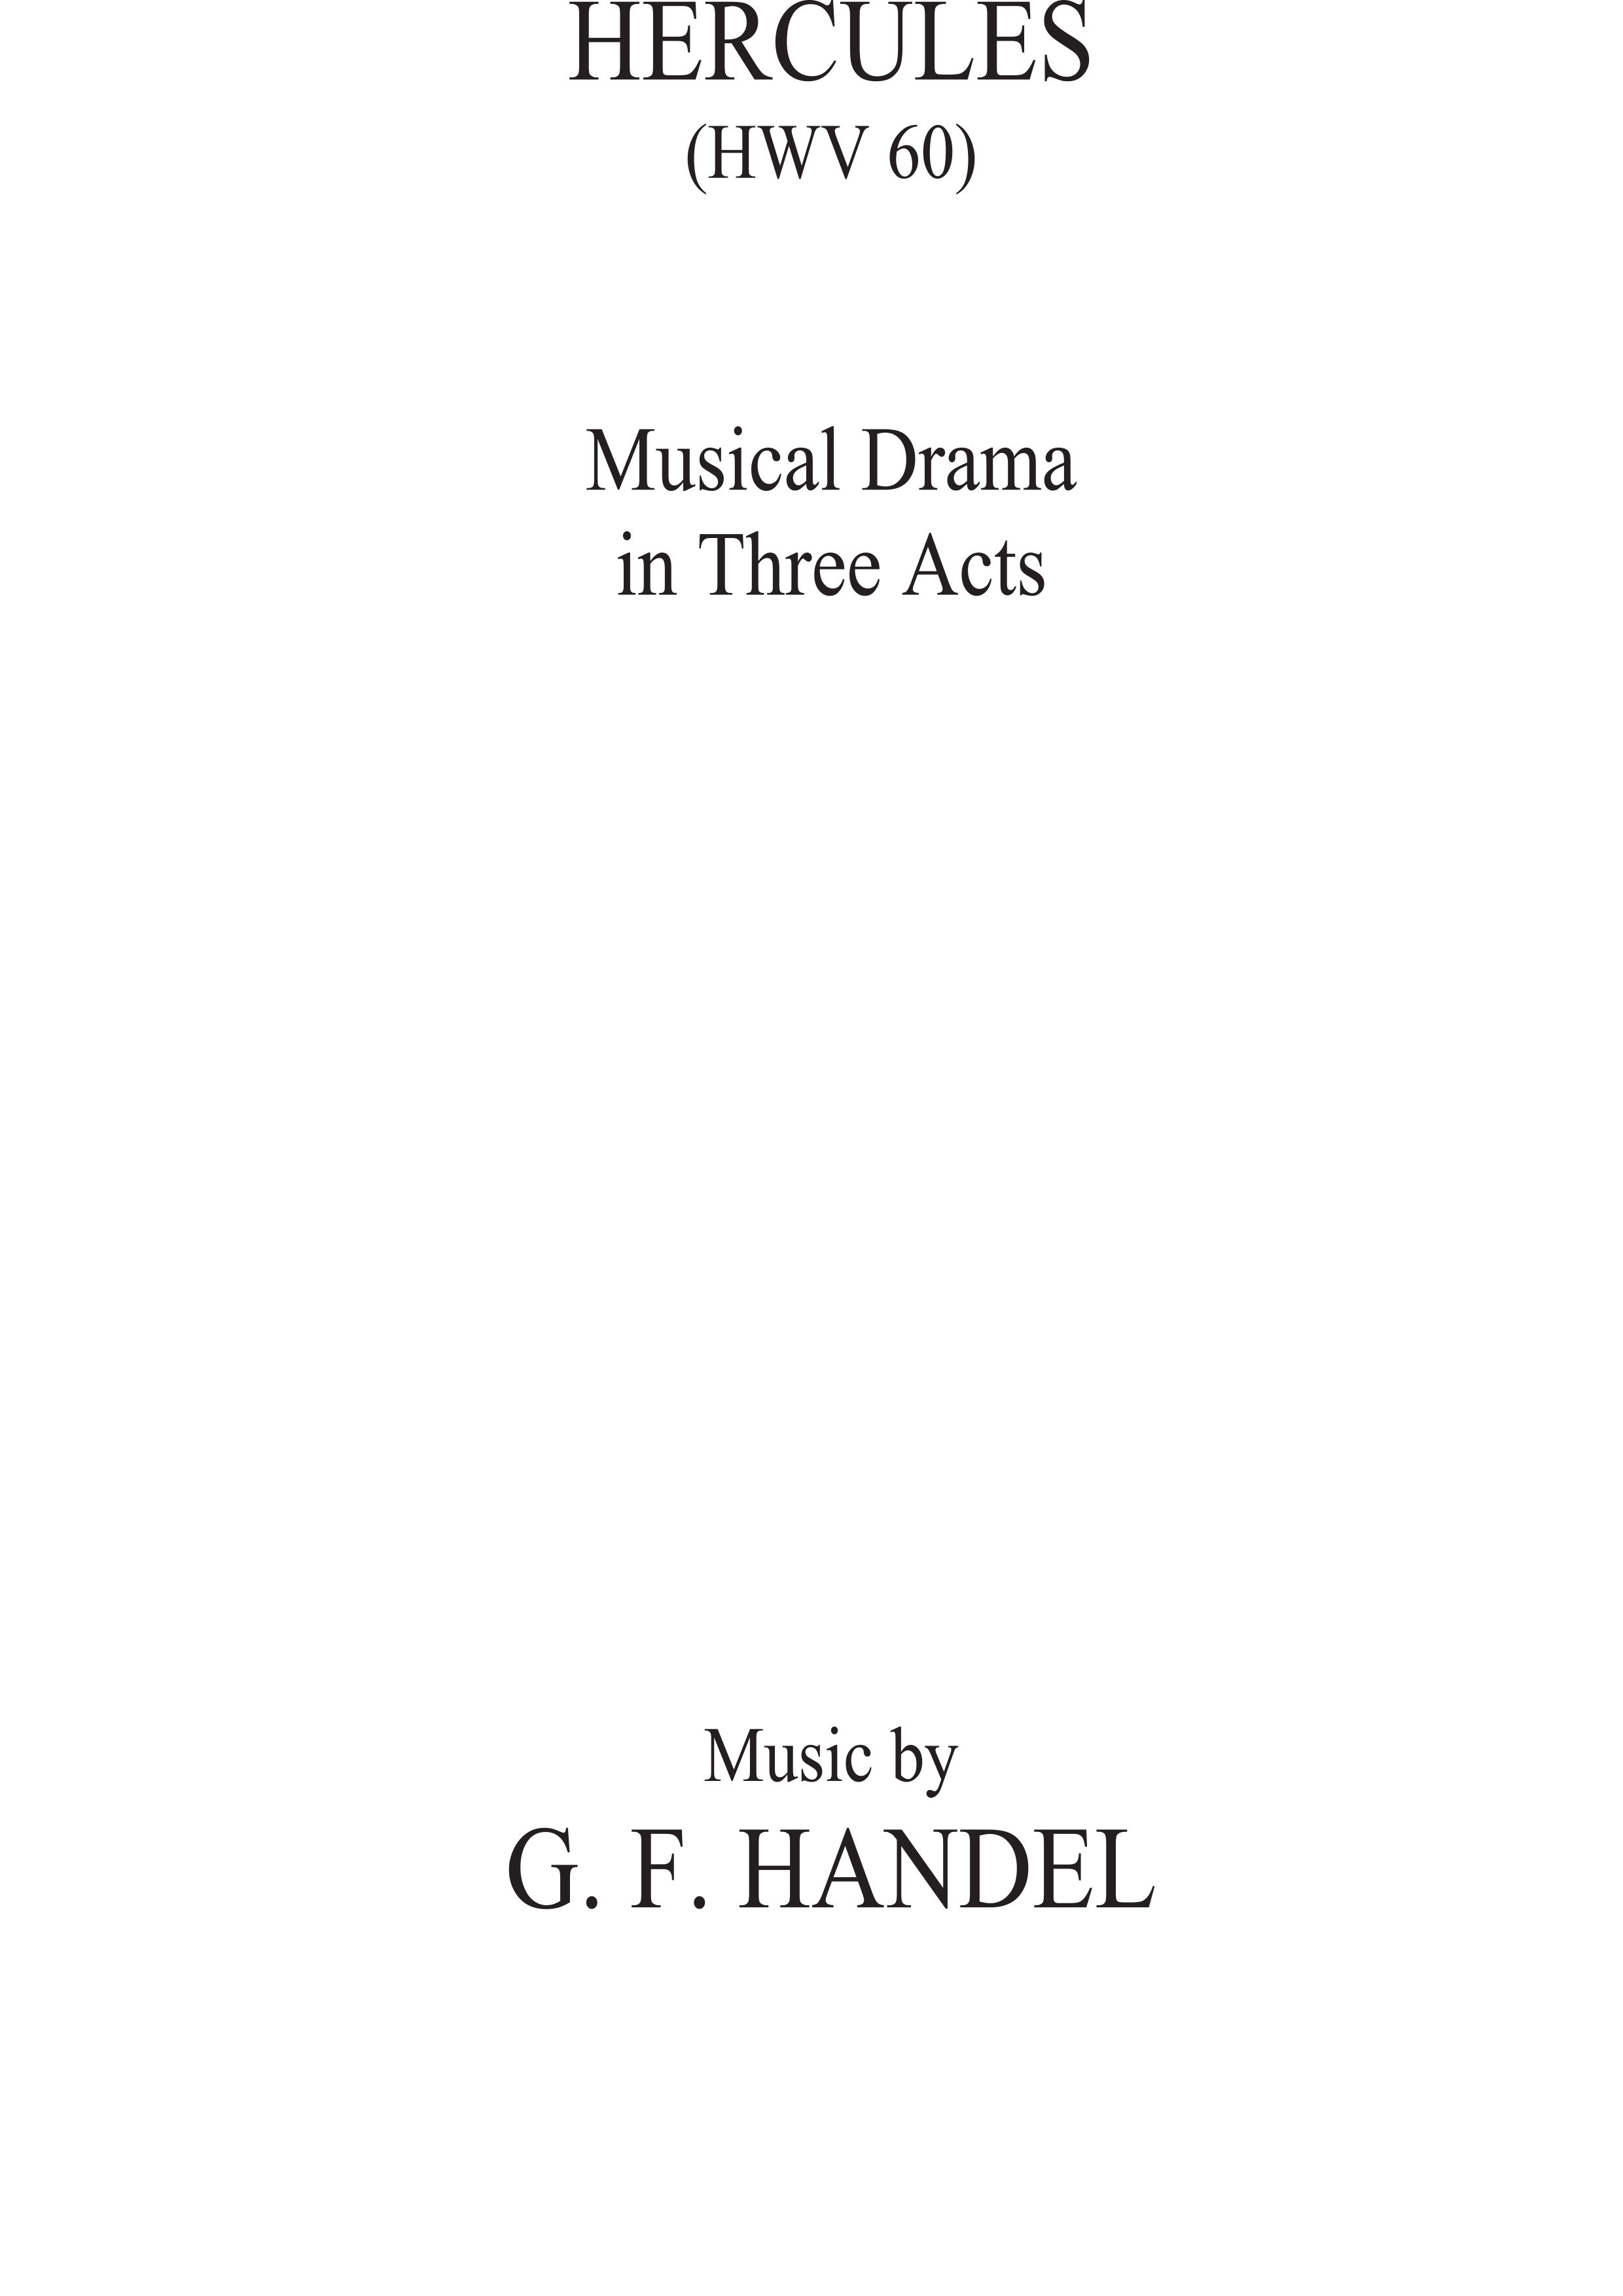 Georg Friedrich Hndel: Hercules (Ed. Peter Jones) (Vocal Score): Mixed Choir: